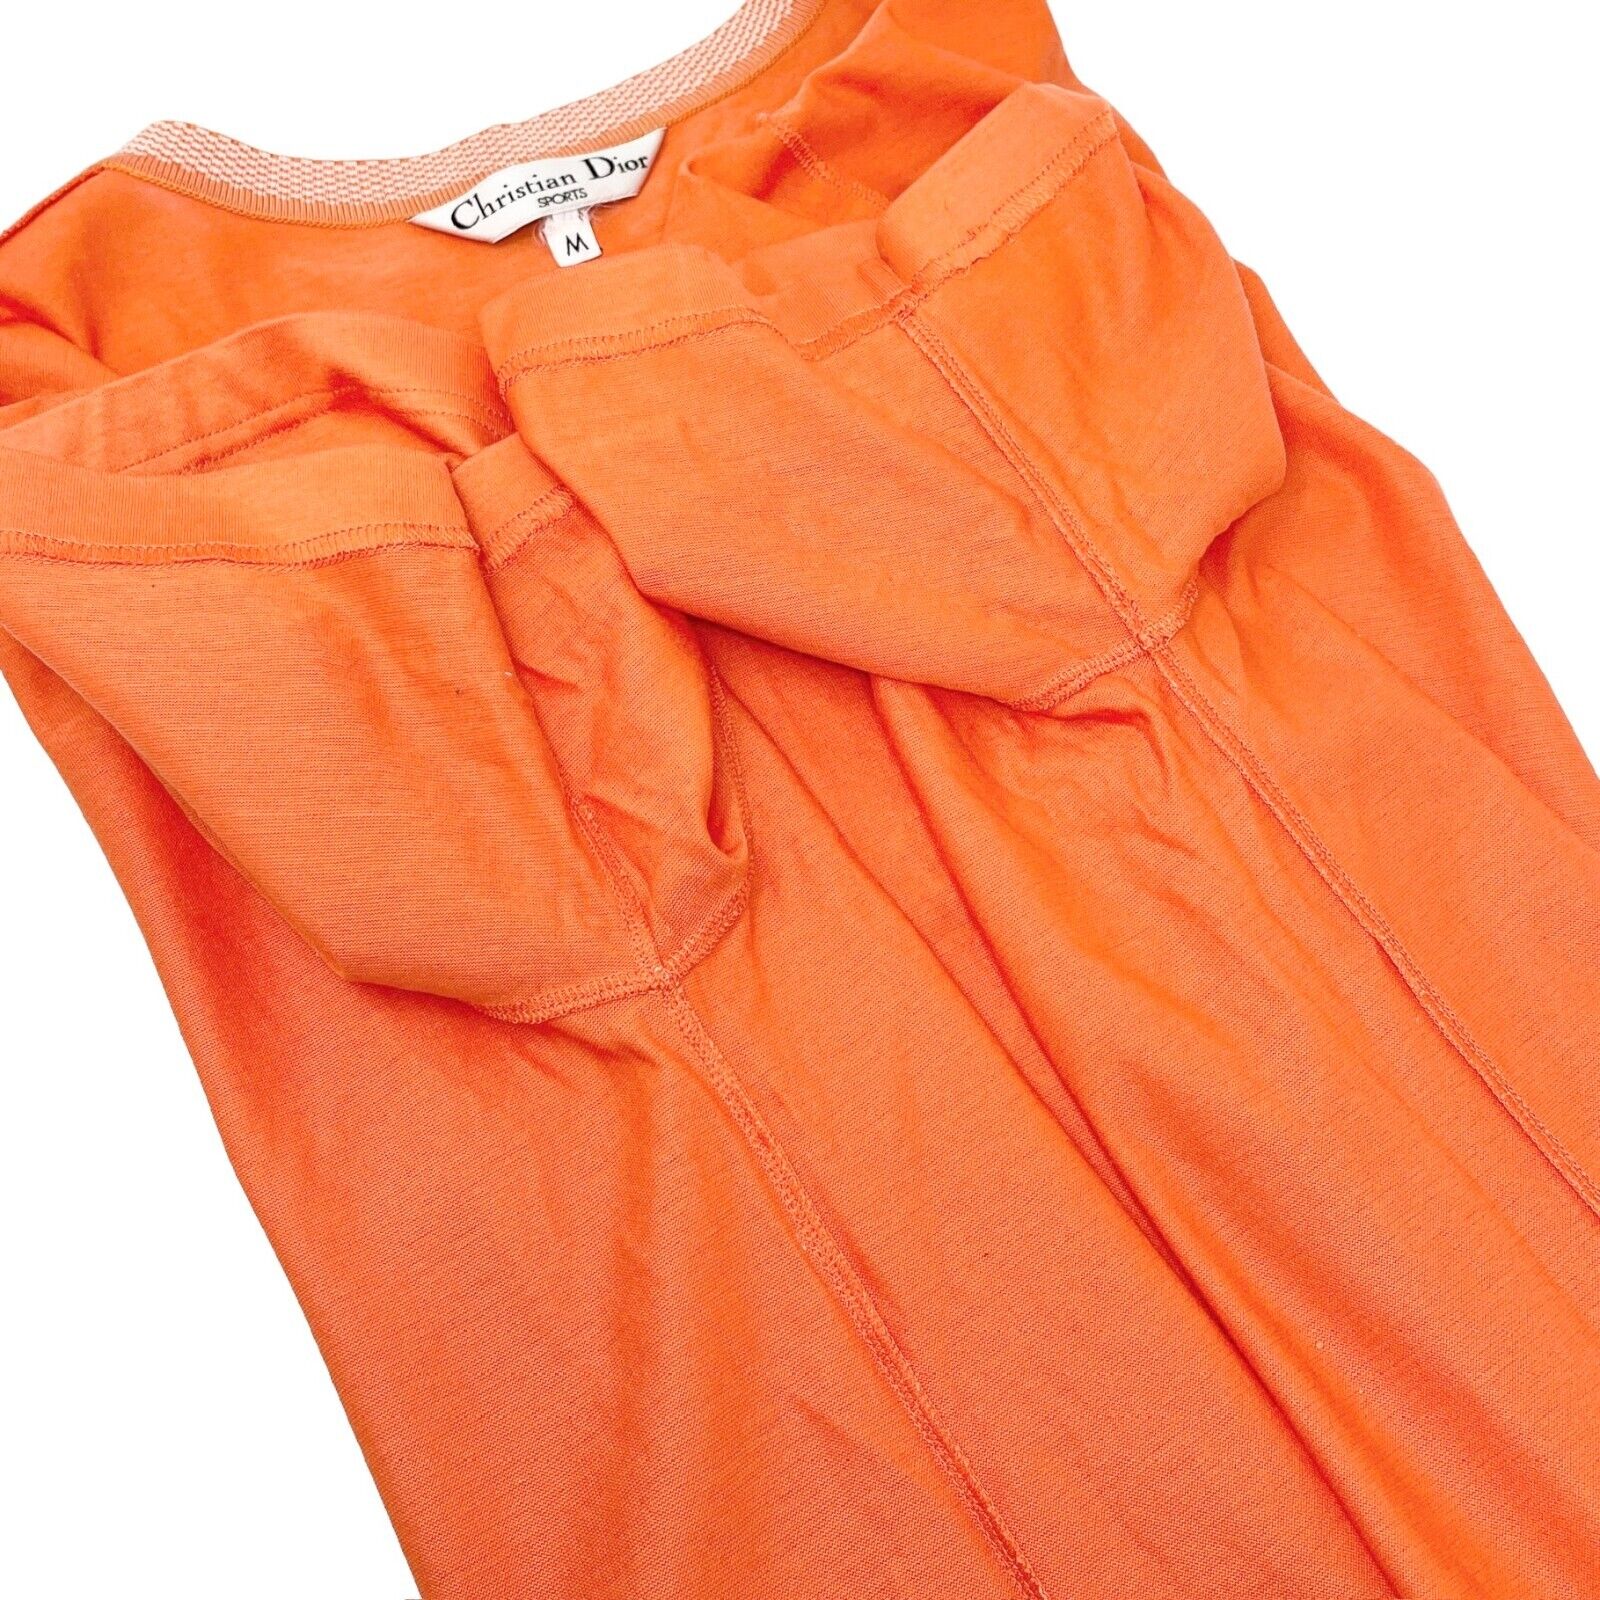 Christian Dior Sports Vintage Big Logo T-shirt #M Top Orange Cotton Rank AB